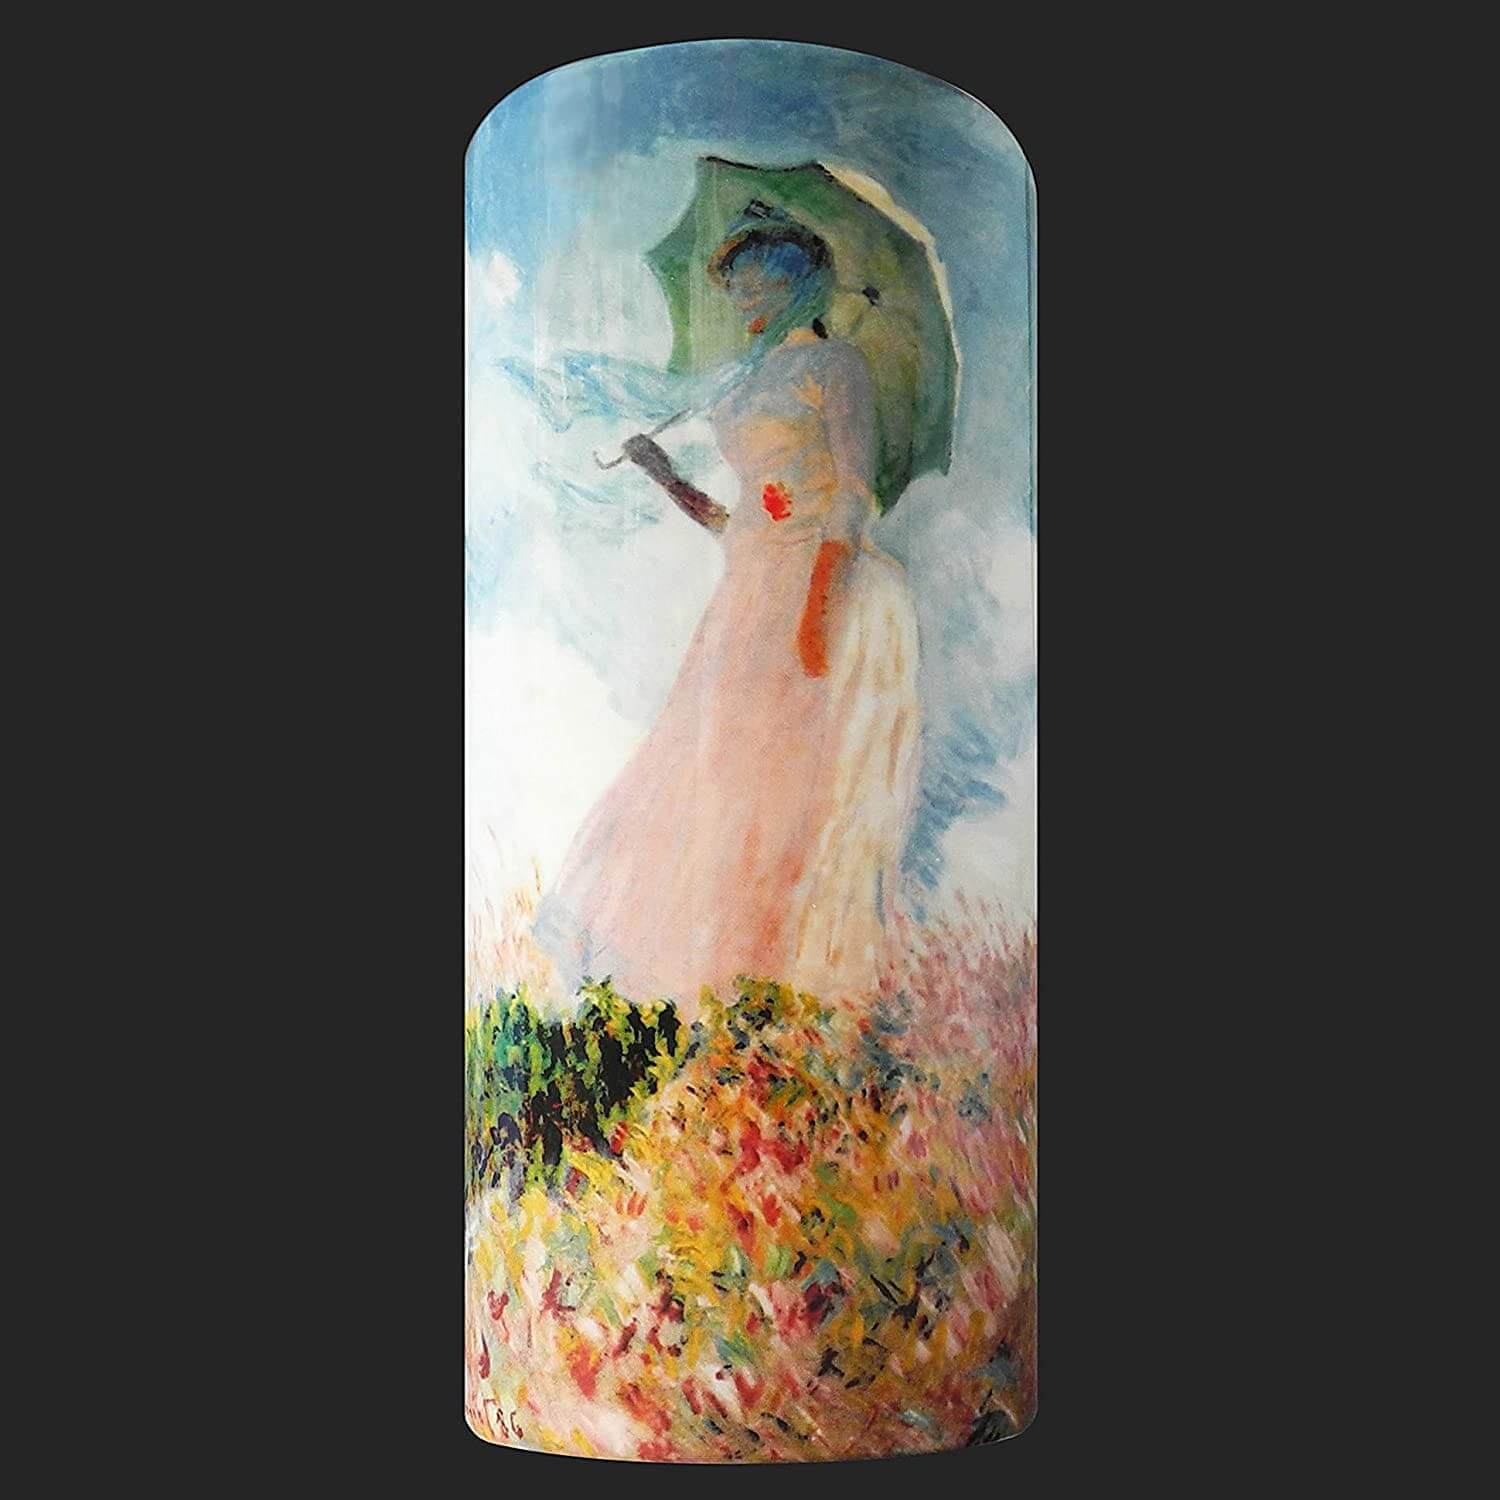 John Beswick Monet - Women with a Parasol Vase